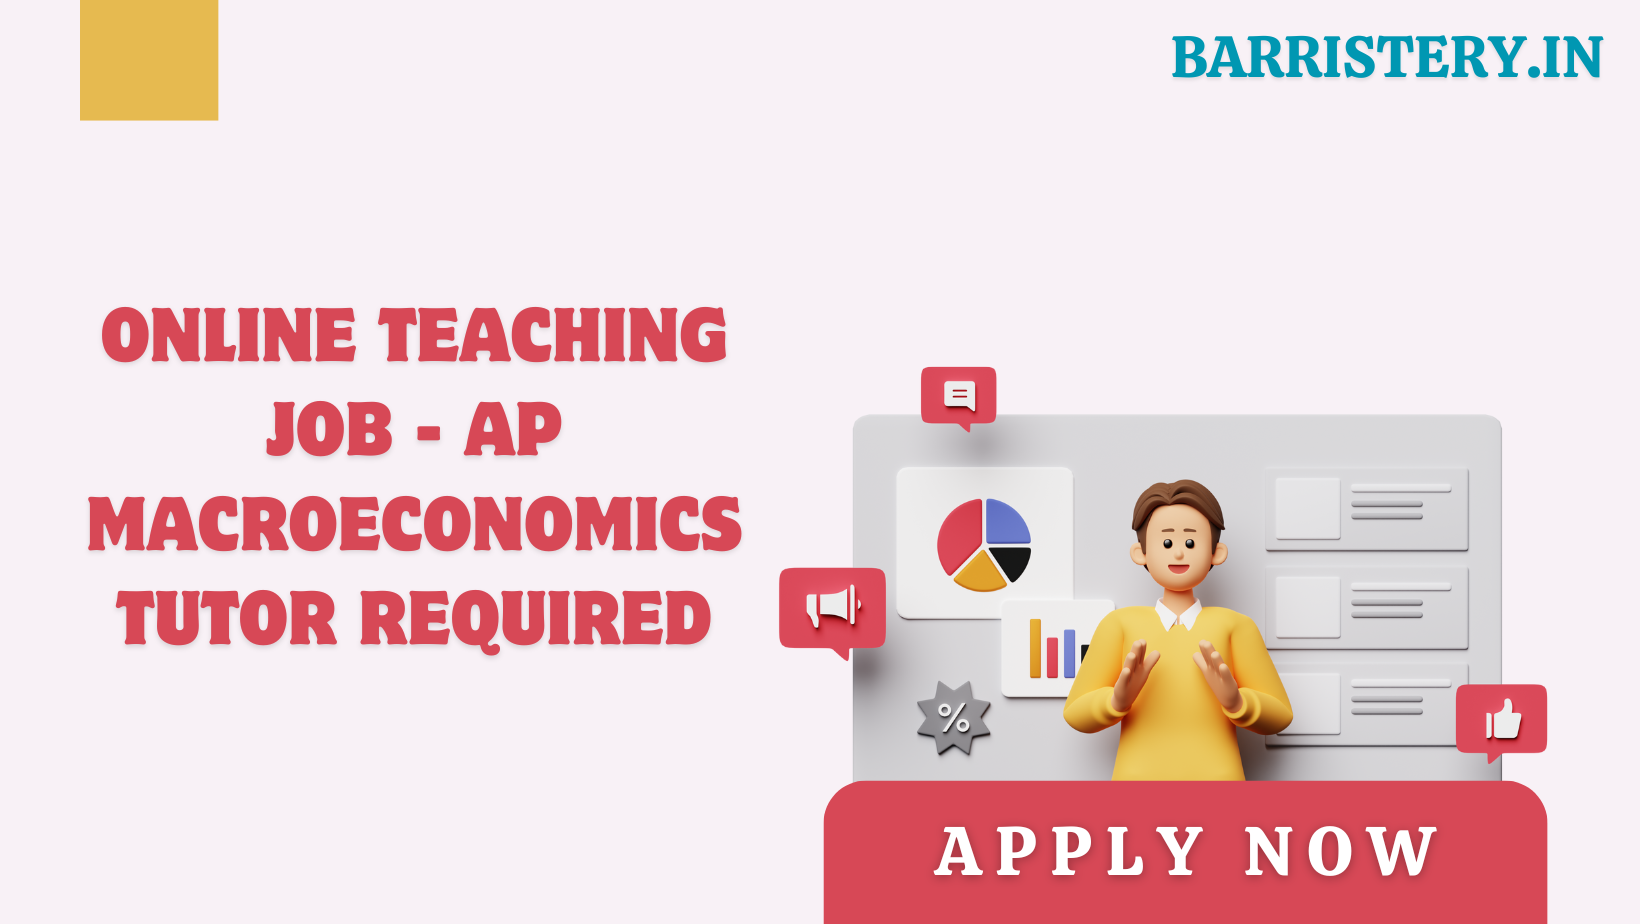 Online Teaching Jobs - AP Macroeconomics Tutor Required : Apply Now